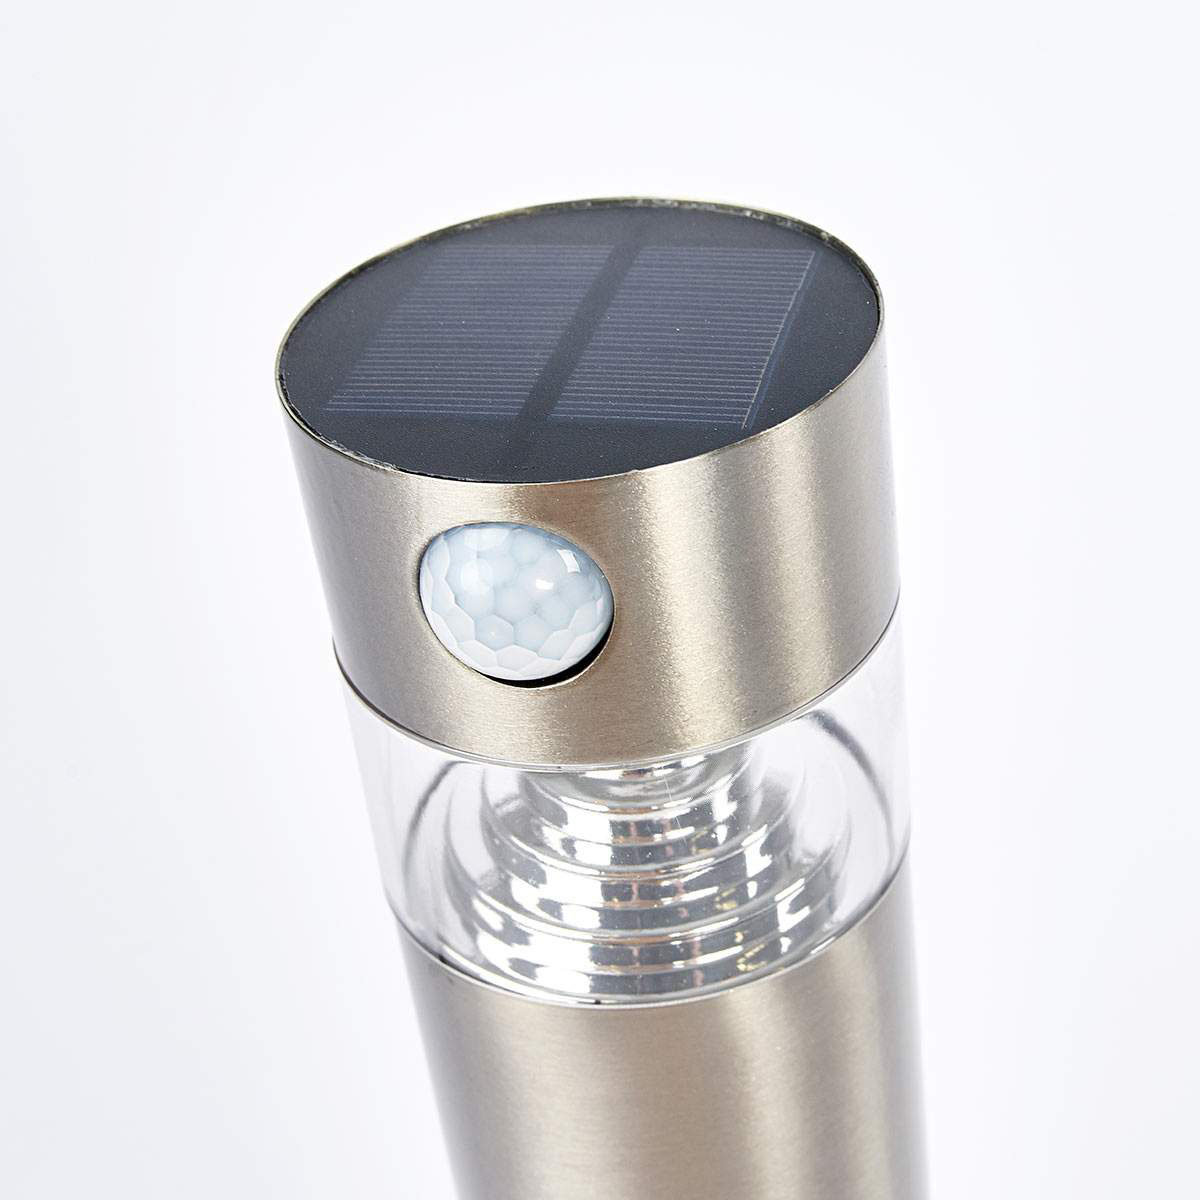 Solar-LED-Sockelleuchte Kalypso mit Bewegungsmelder, 50x7,8x7,8 cm, Edelstahl, silber
| #5